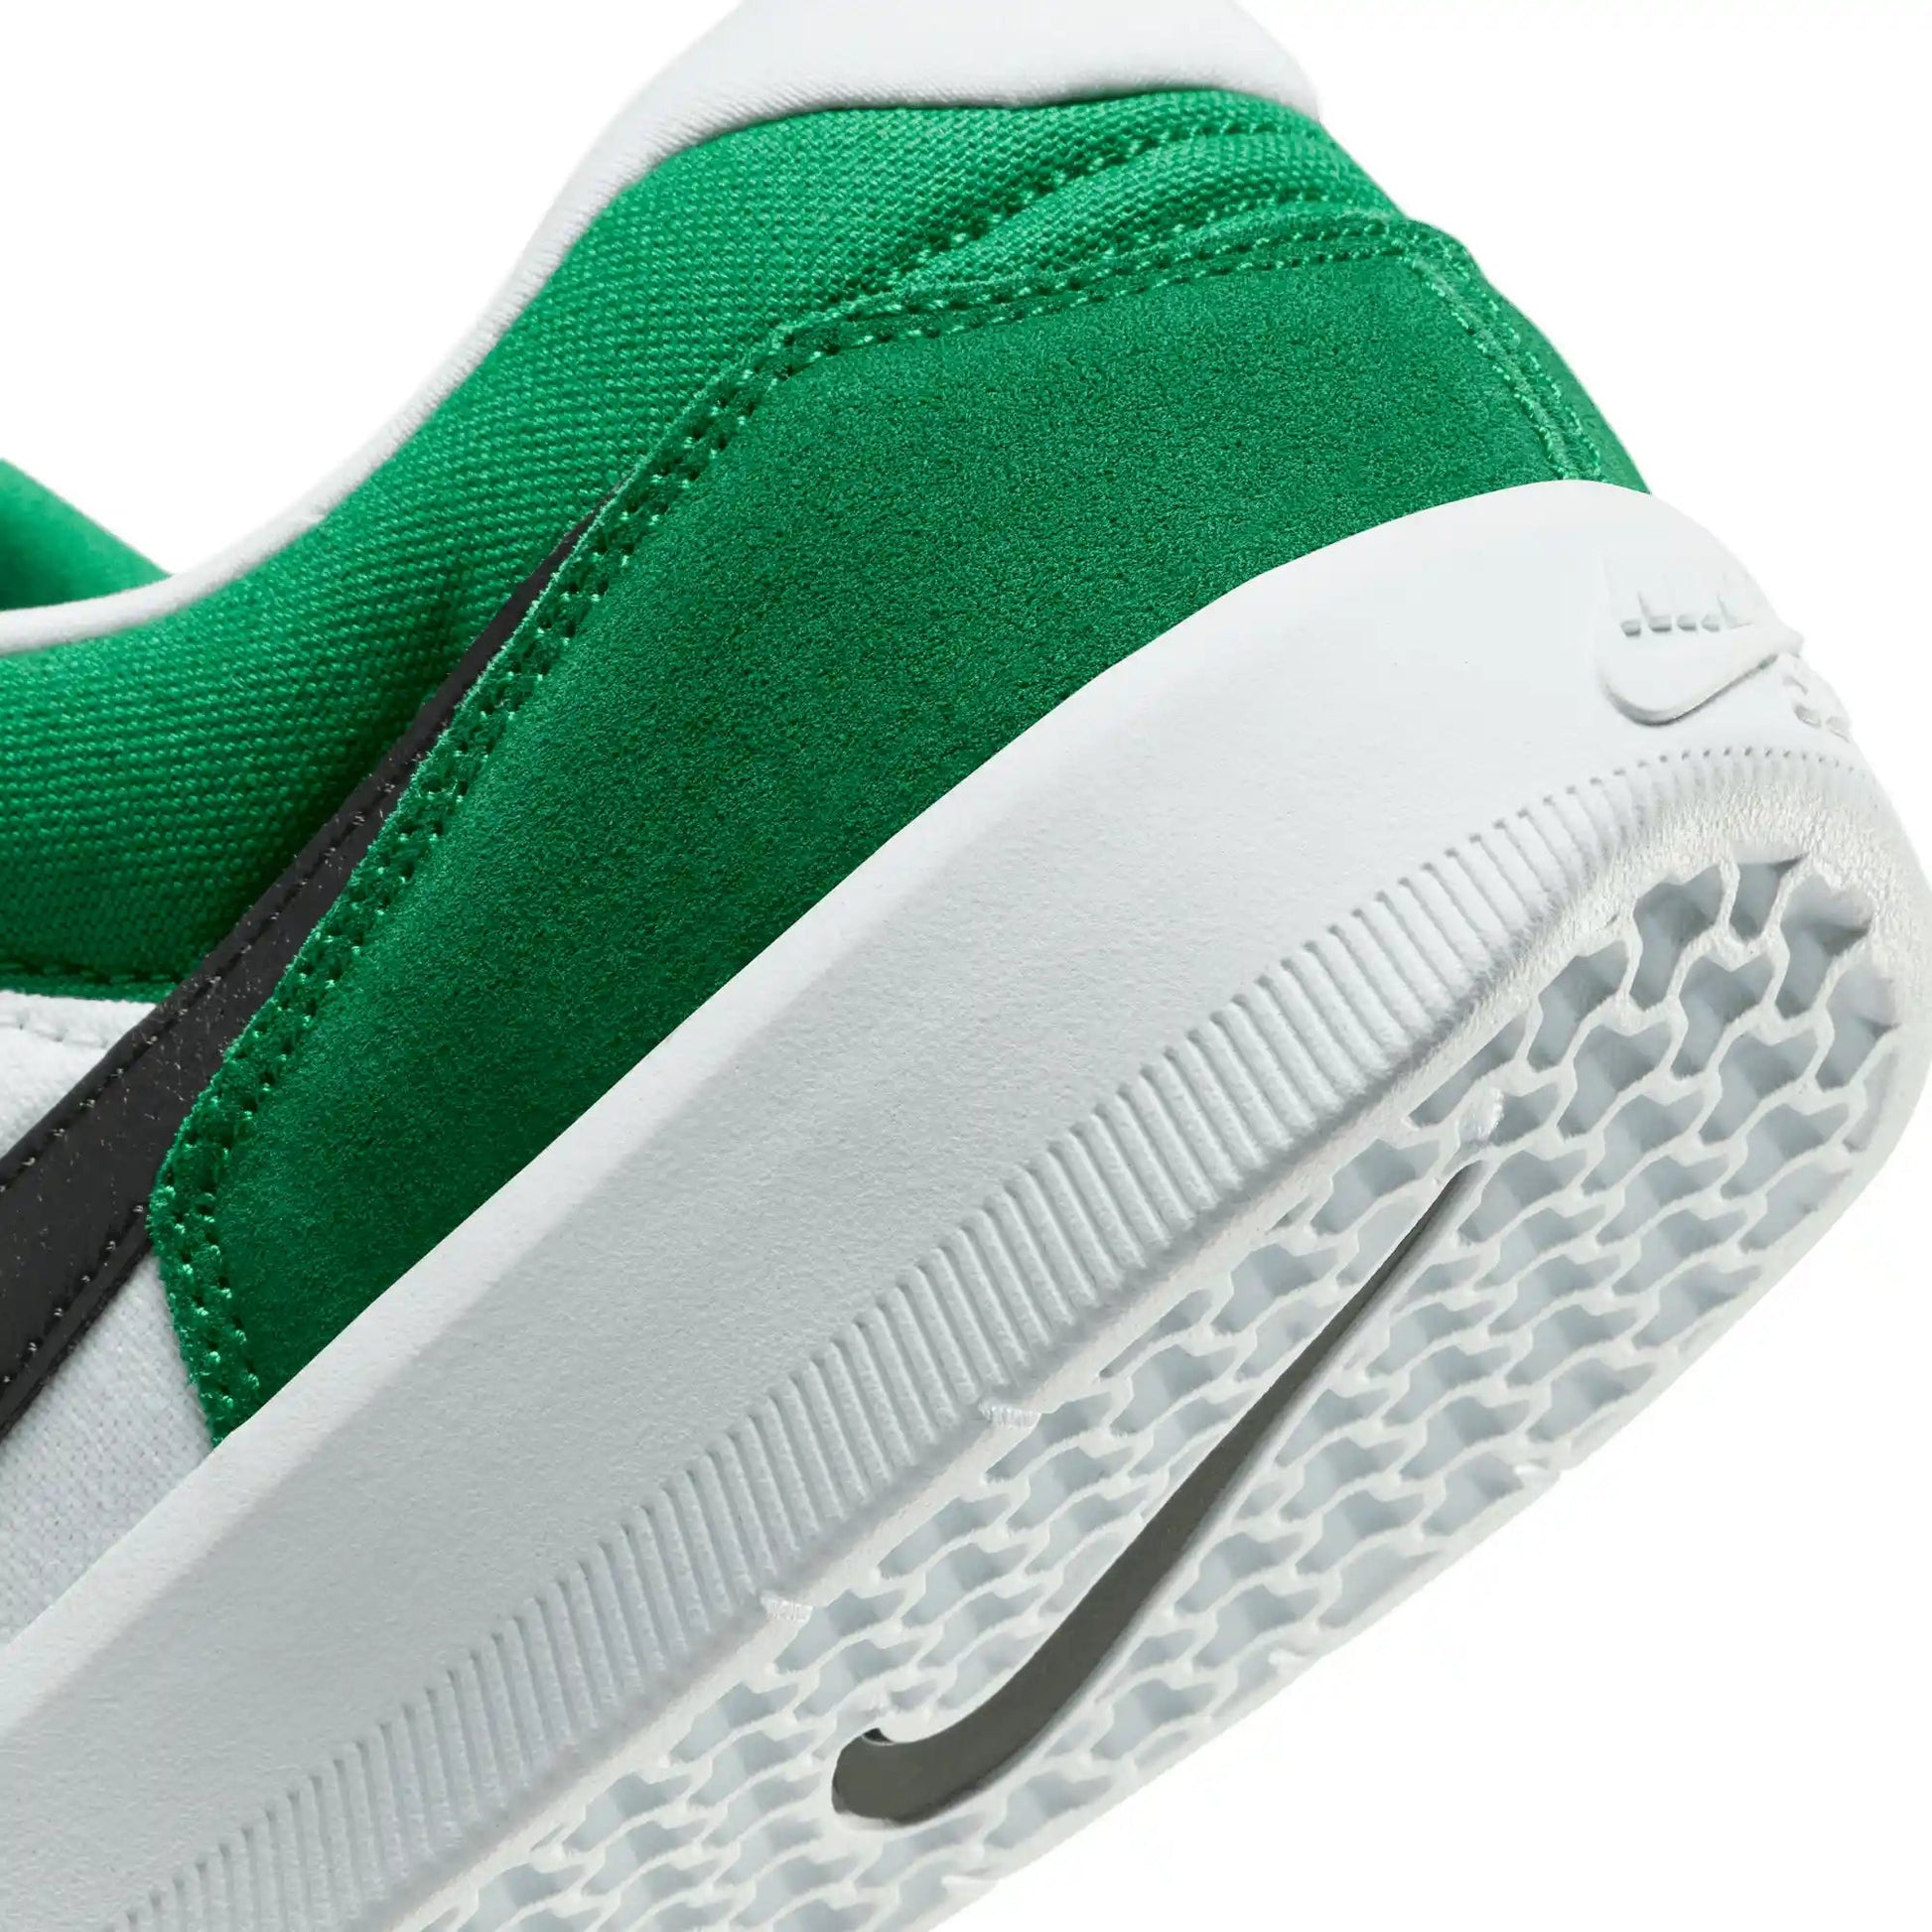 Nike SB Force 58, pine green/black-white-white - Tiki Room Skateboards - 3